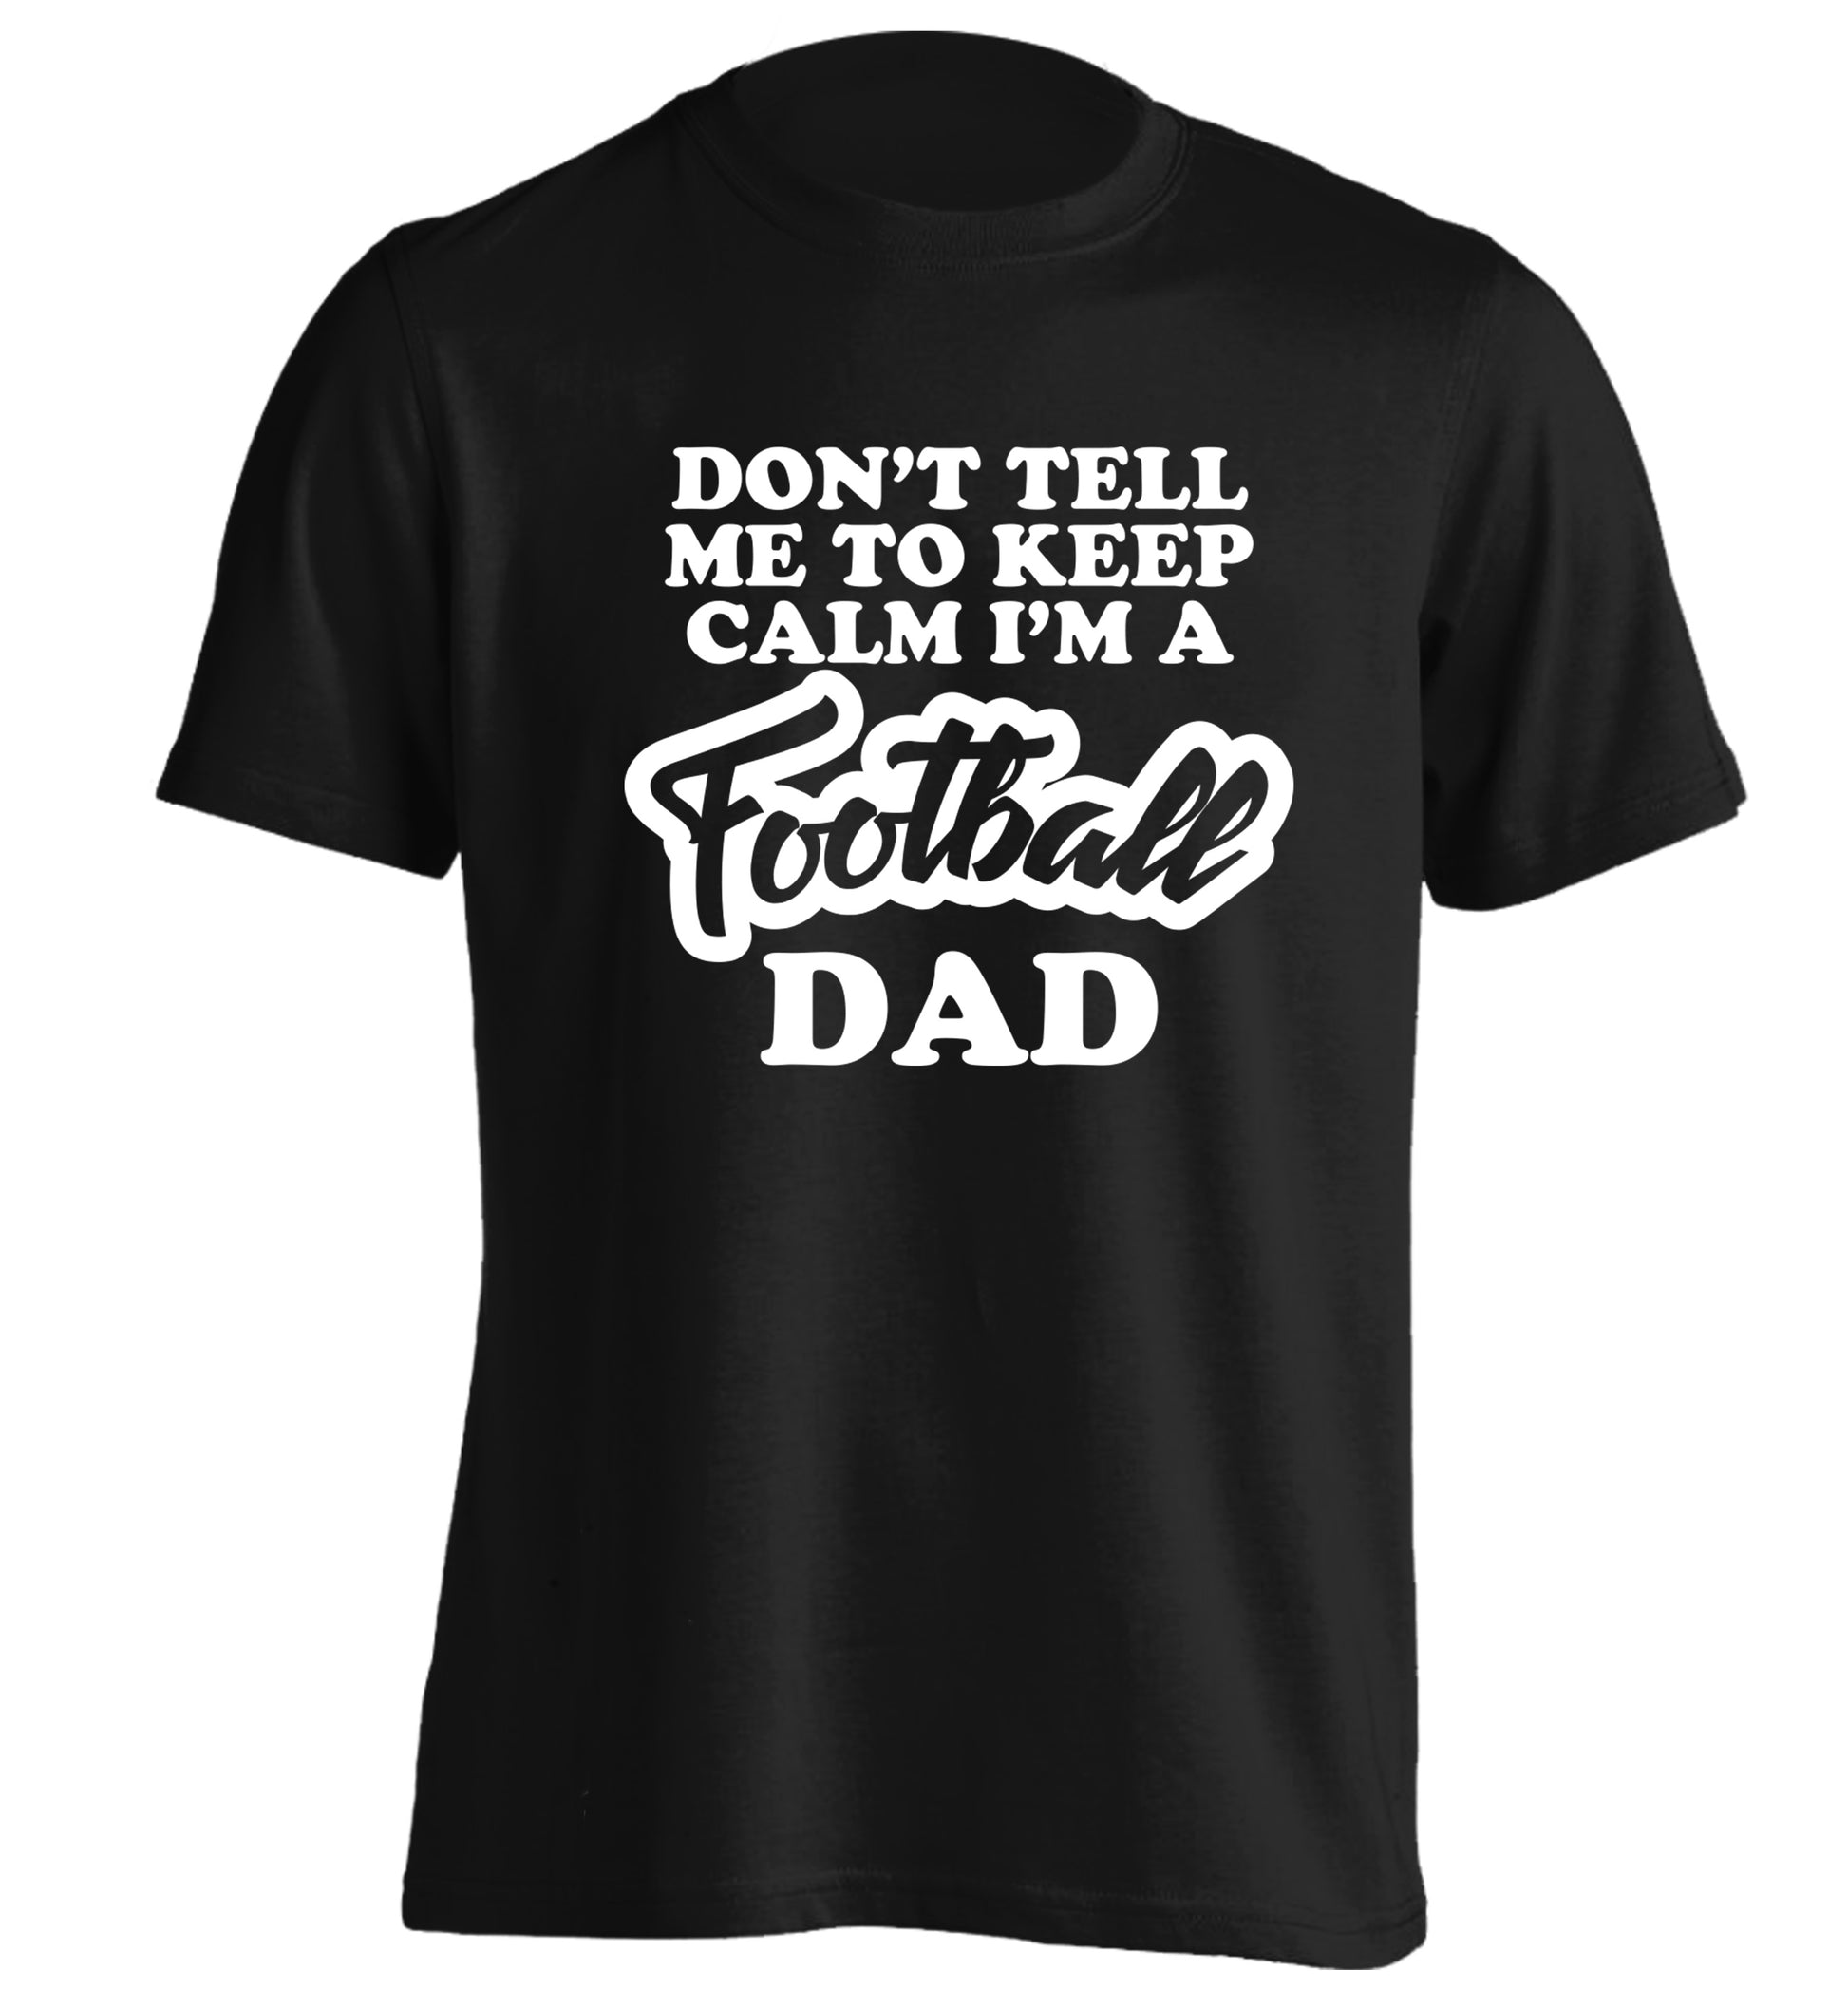 Don't tell me to keep calm I'm a football grandad adults unisexblack Tshirt 2XL